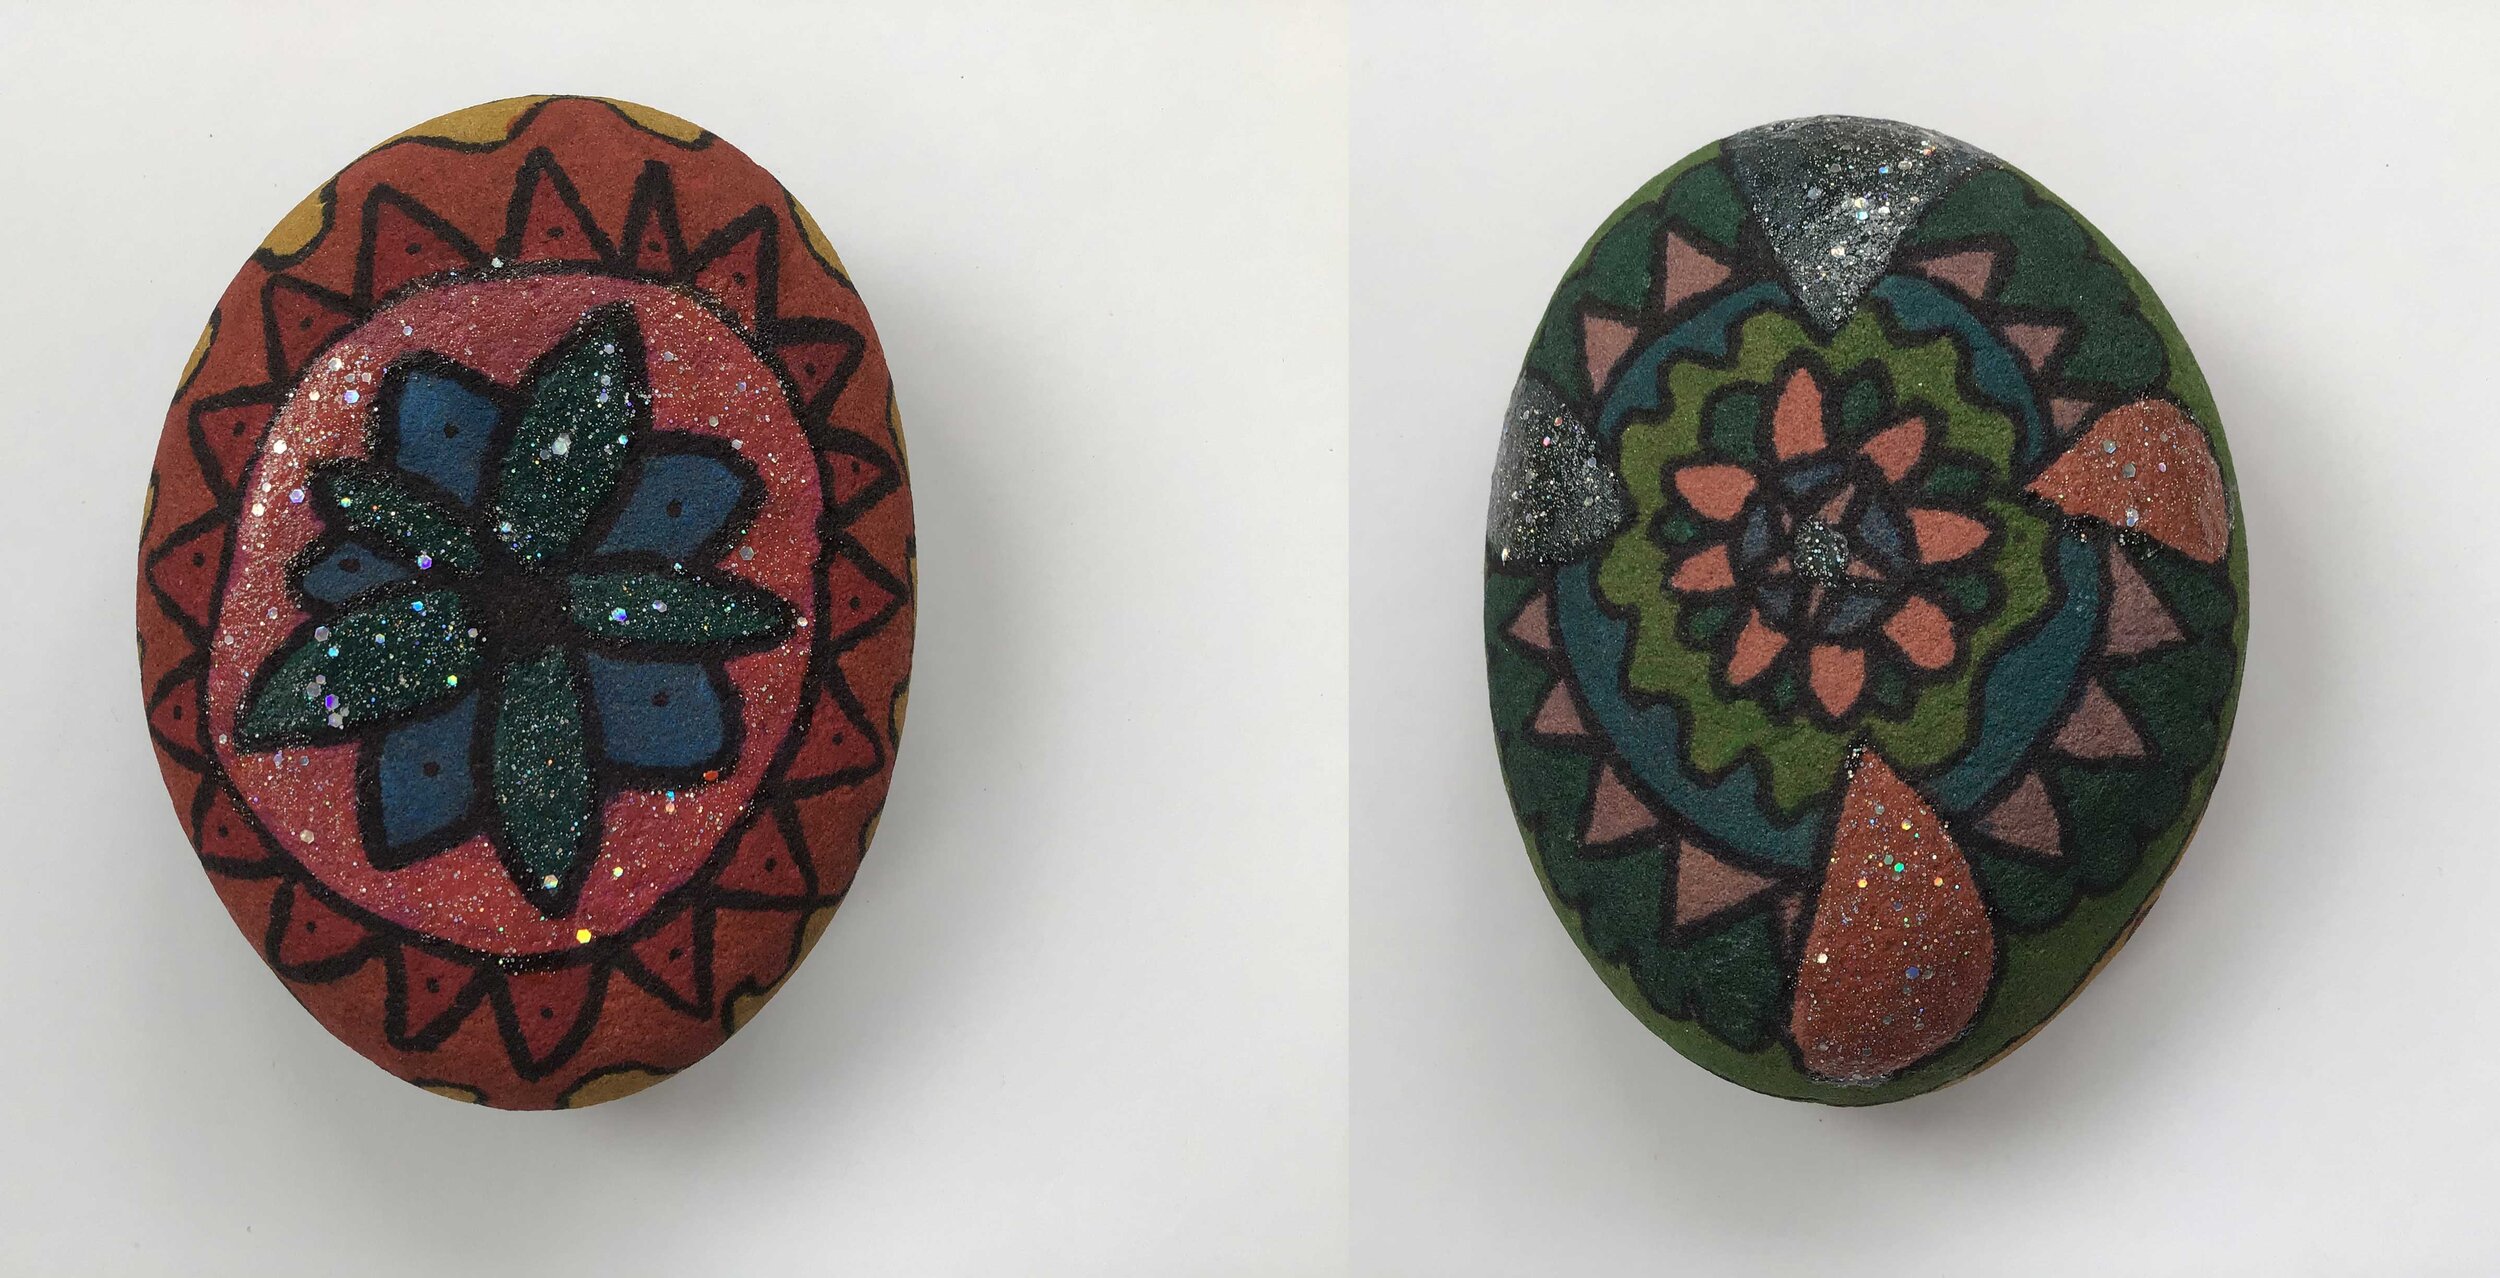 Stone art by Ana Scott age 8